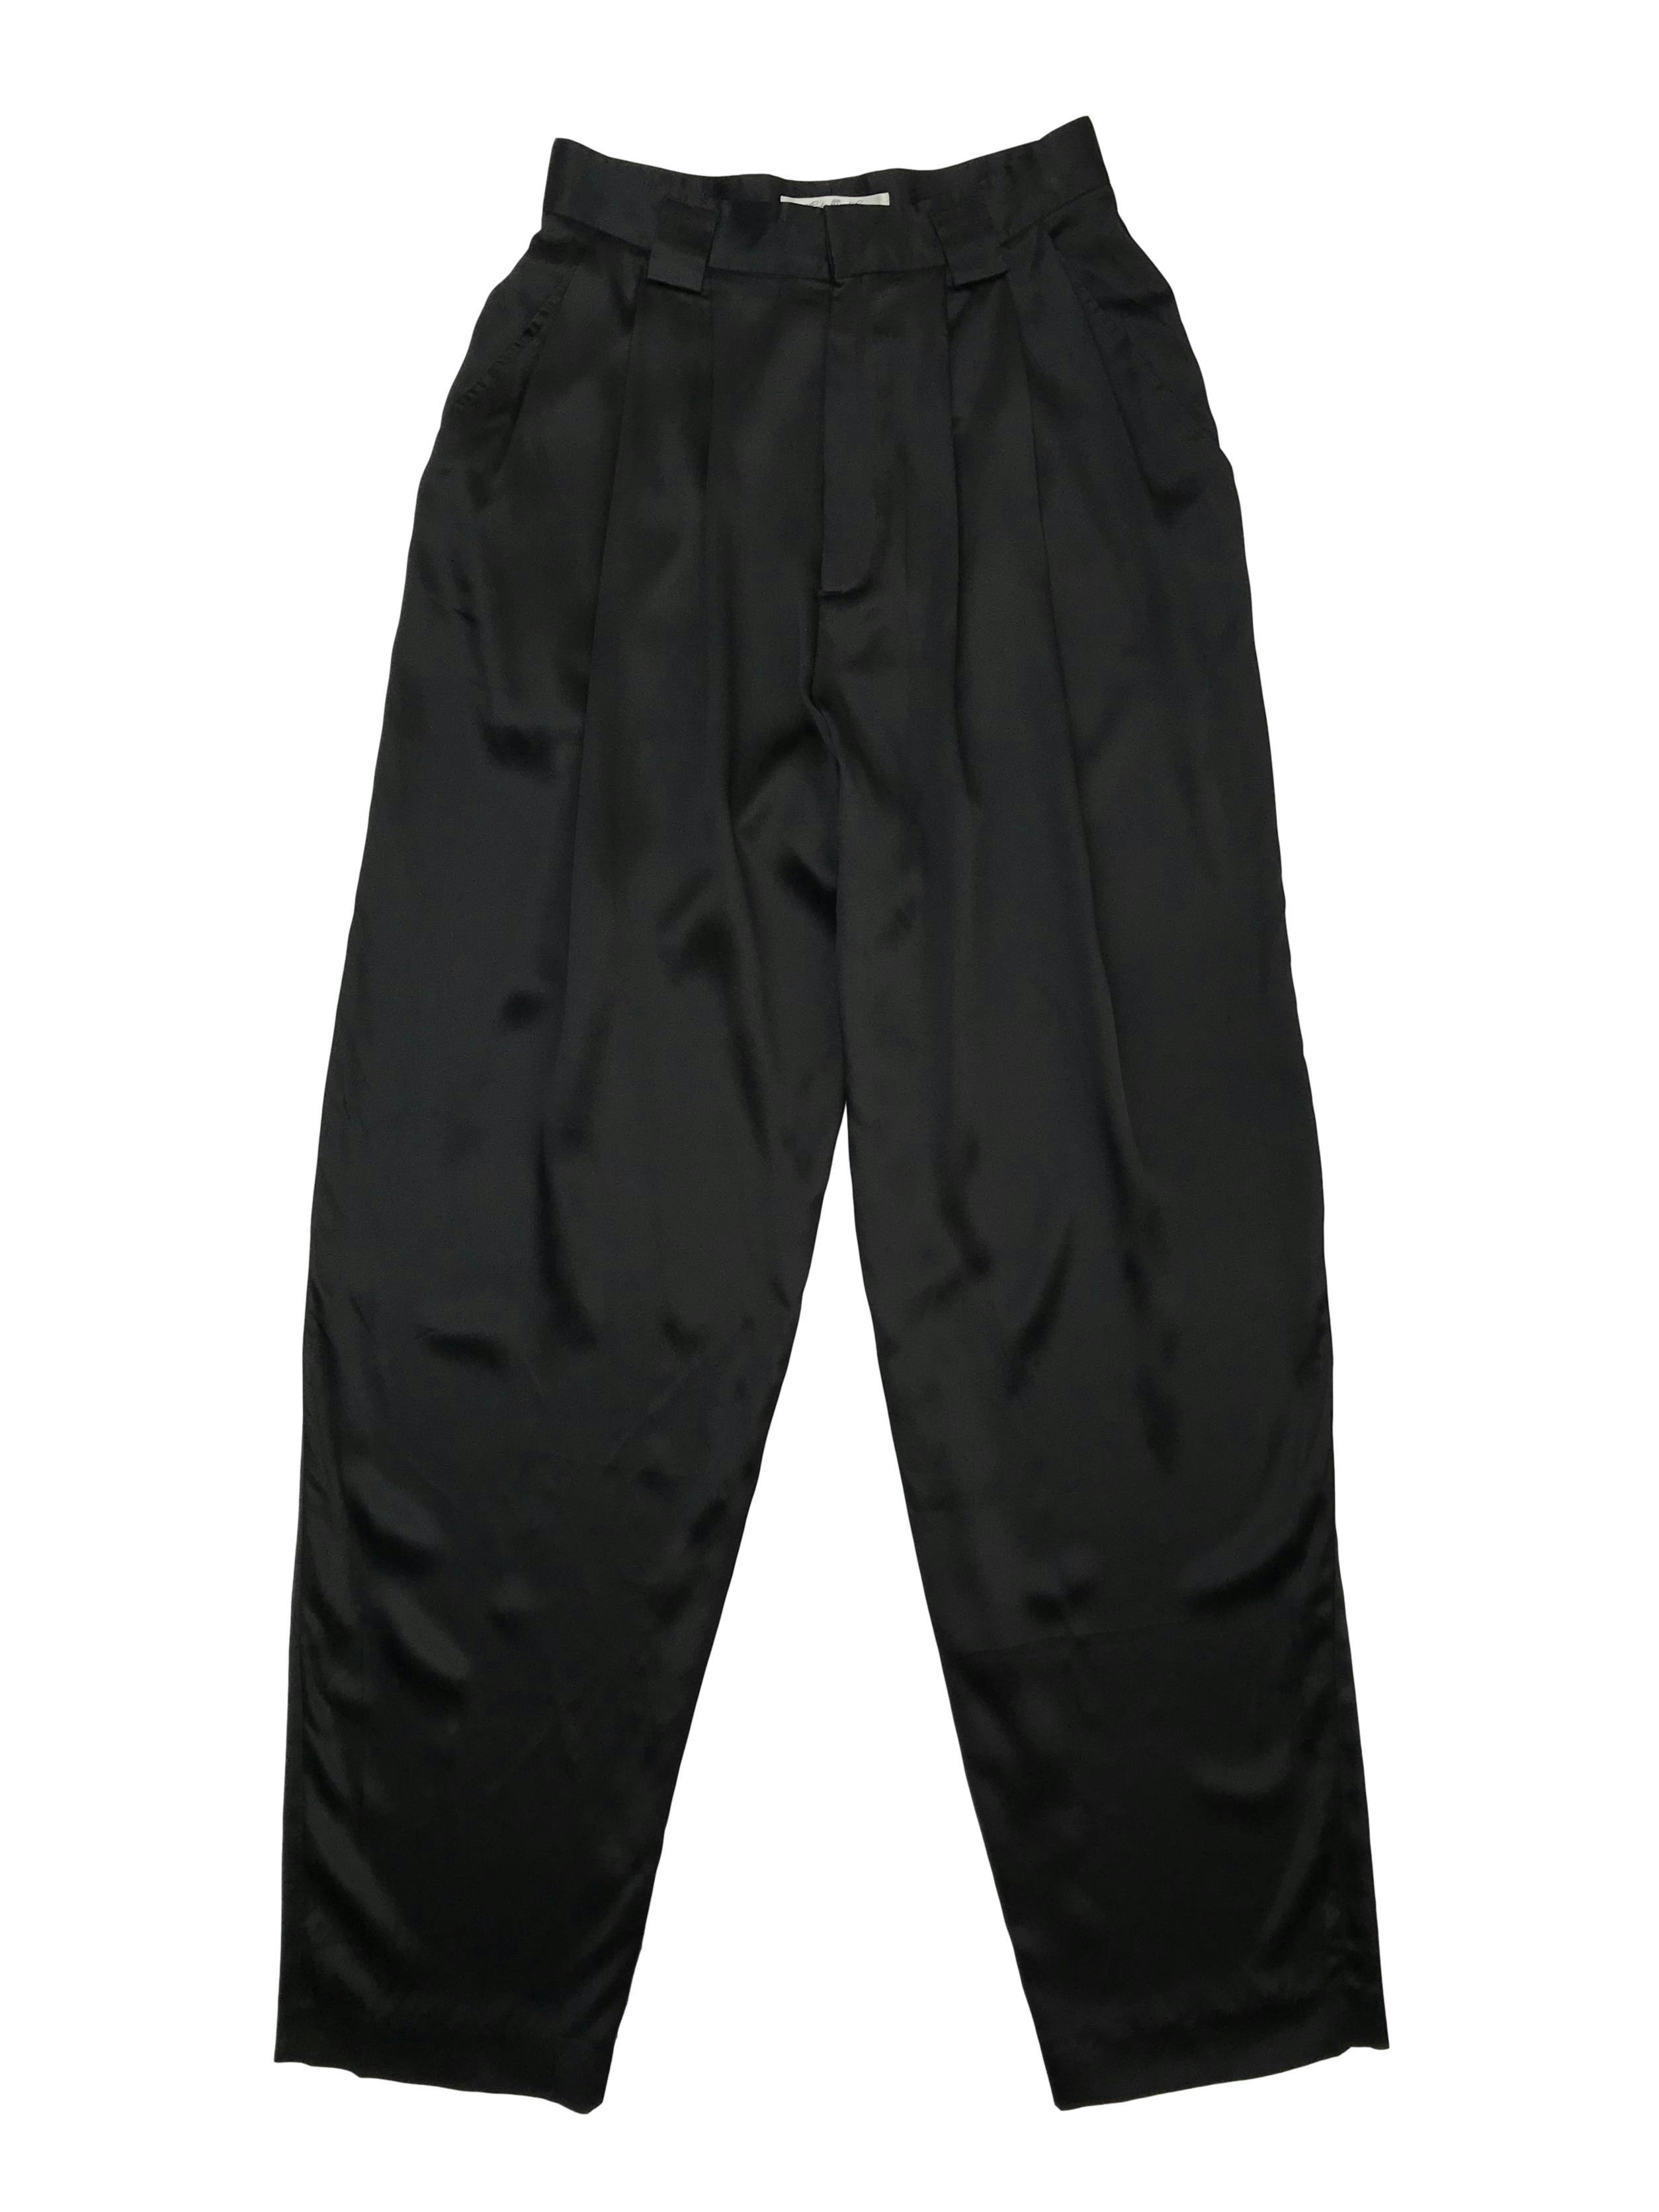 Pantalón slouchy Linda Allard for Ellen Tracy 100% seda negra. Cintura  66cm Largo 110cm (para adaptar a tu alruta)